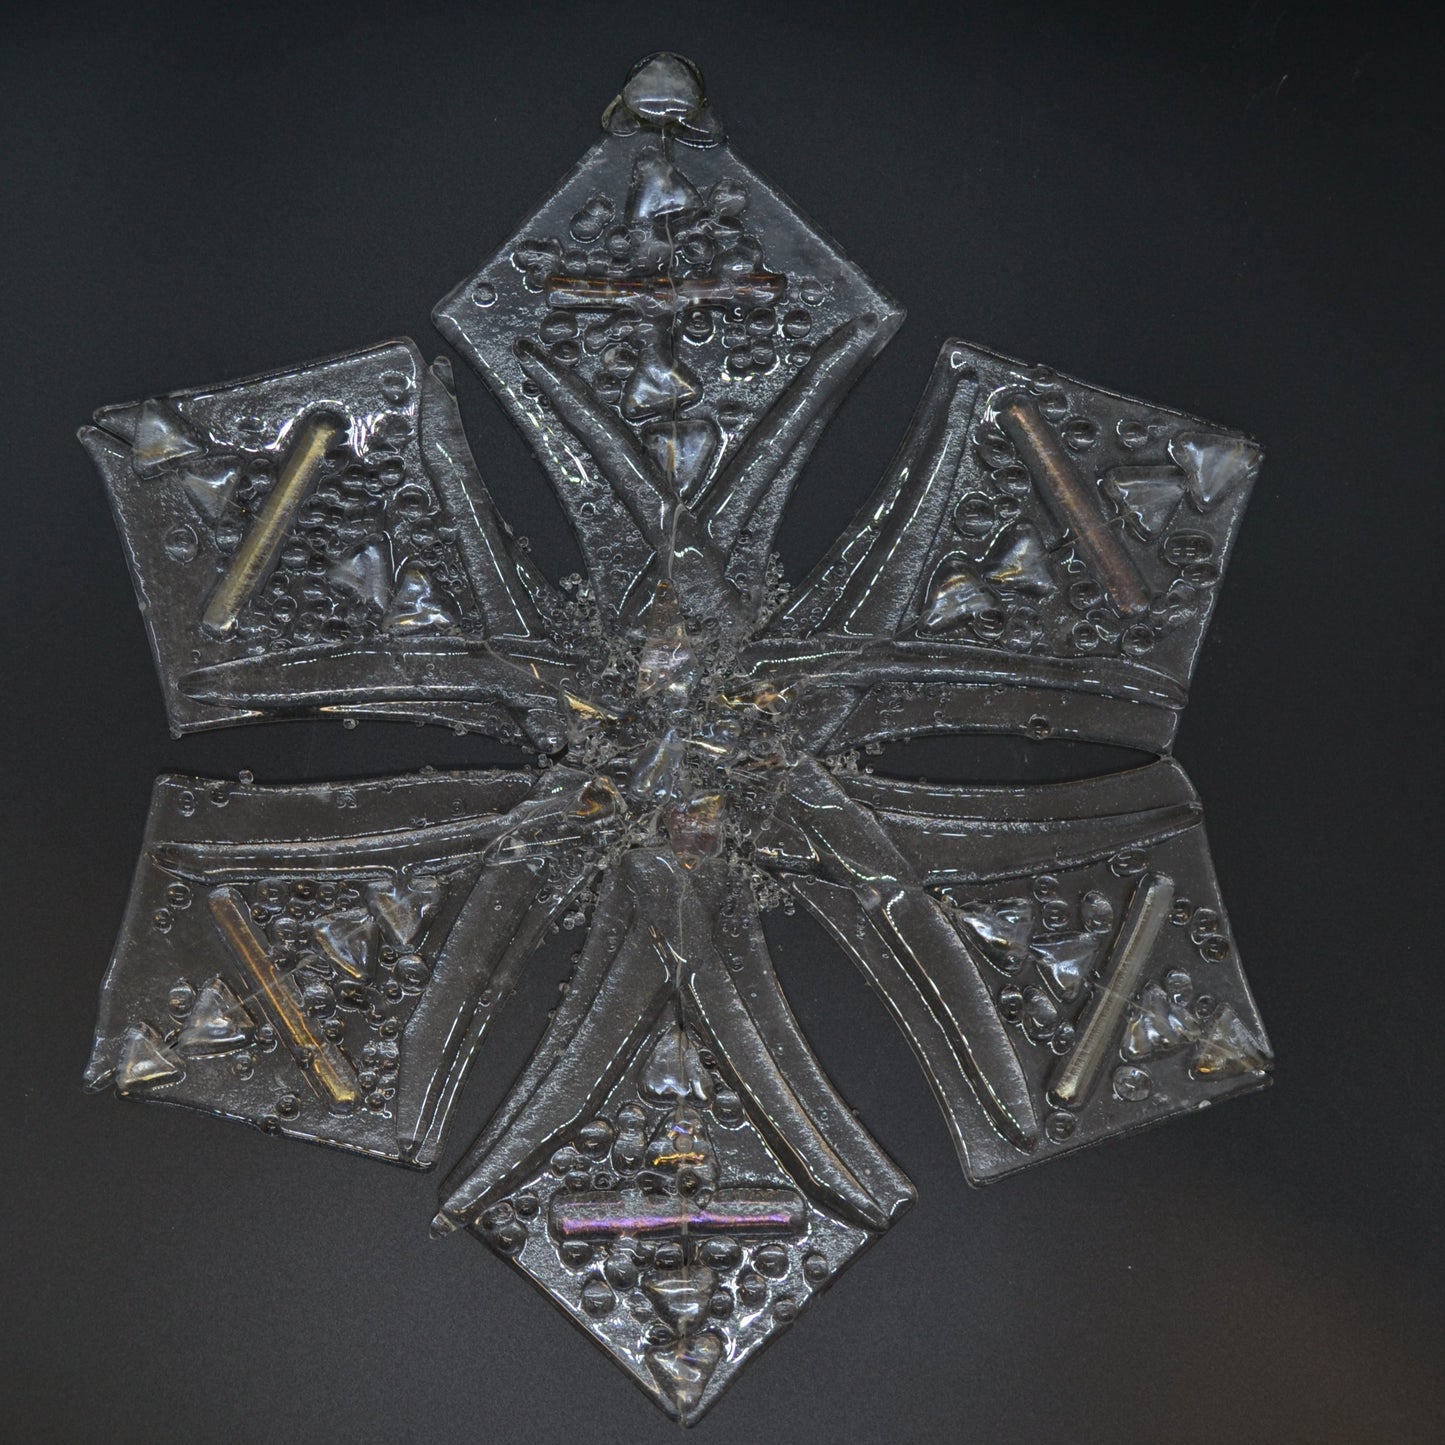 Hand- cut Glass Snowflakes